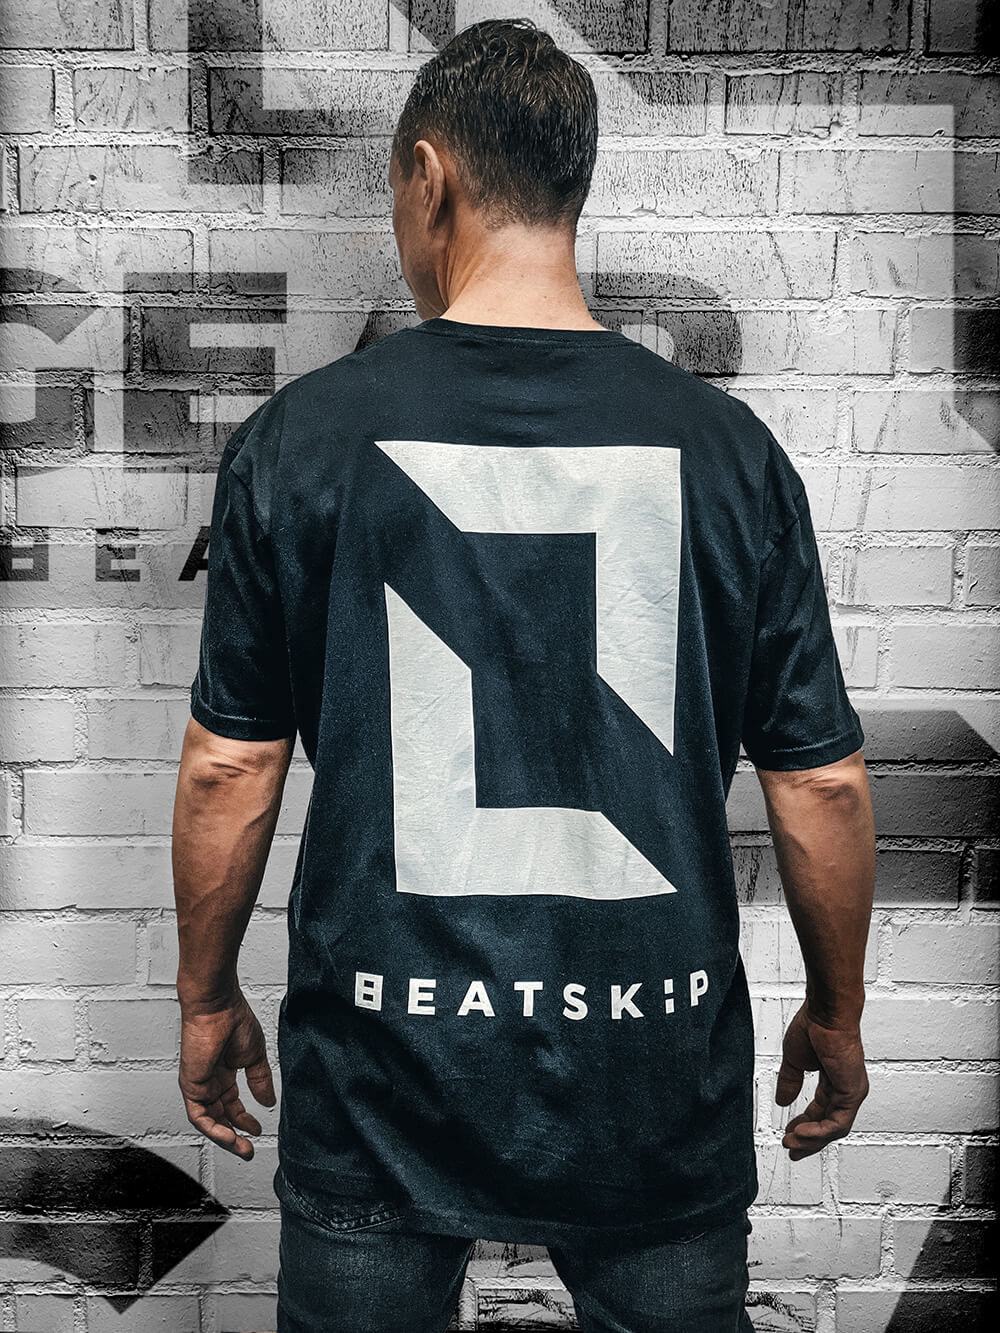 Beatskip Gear - Independent streetwear brand from Beatskip powered by music